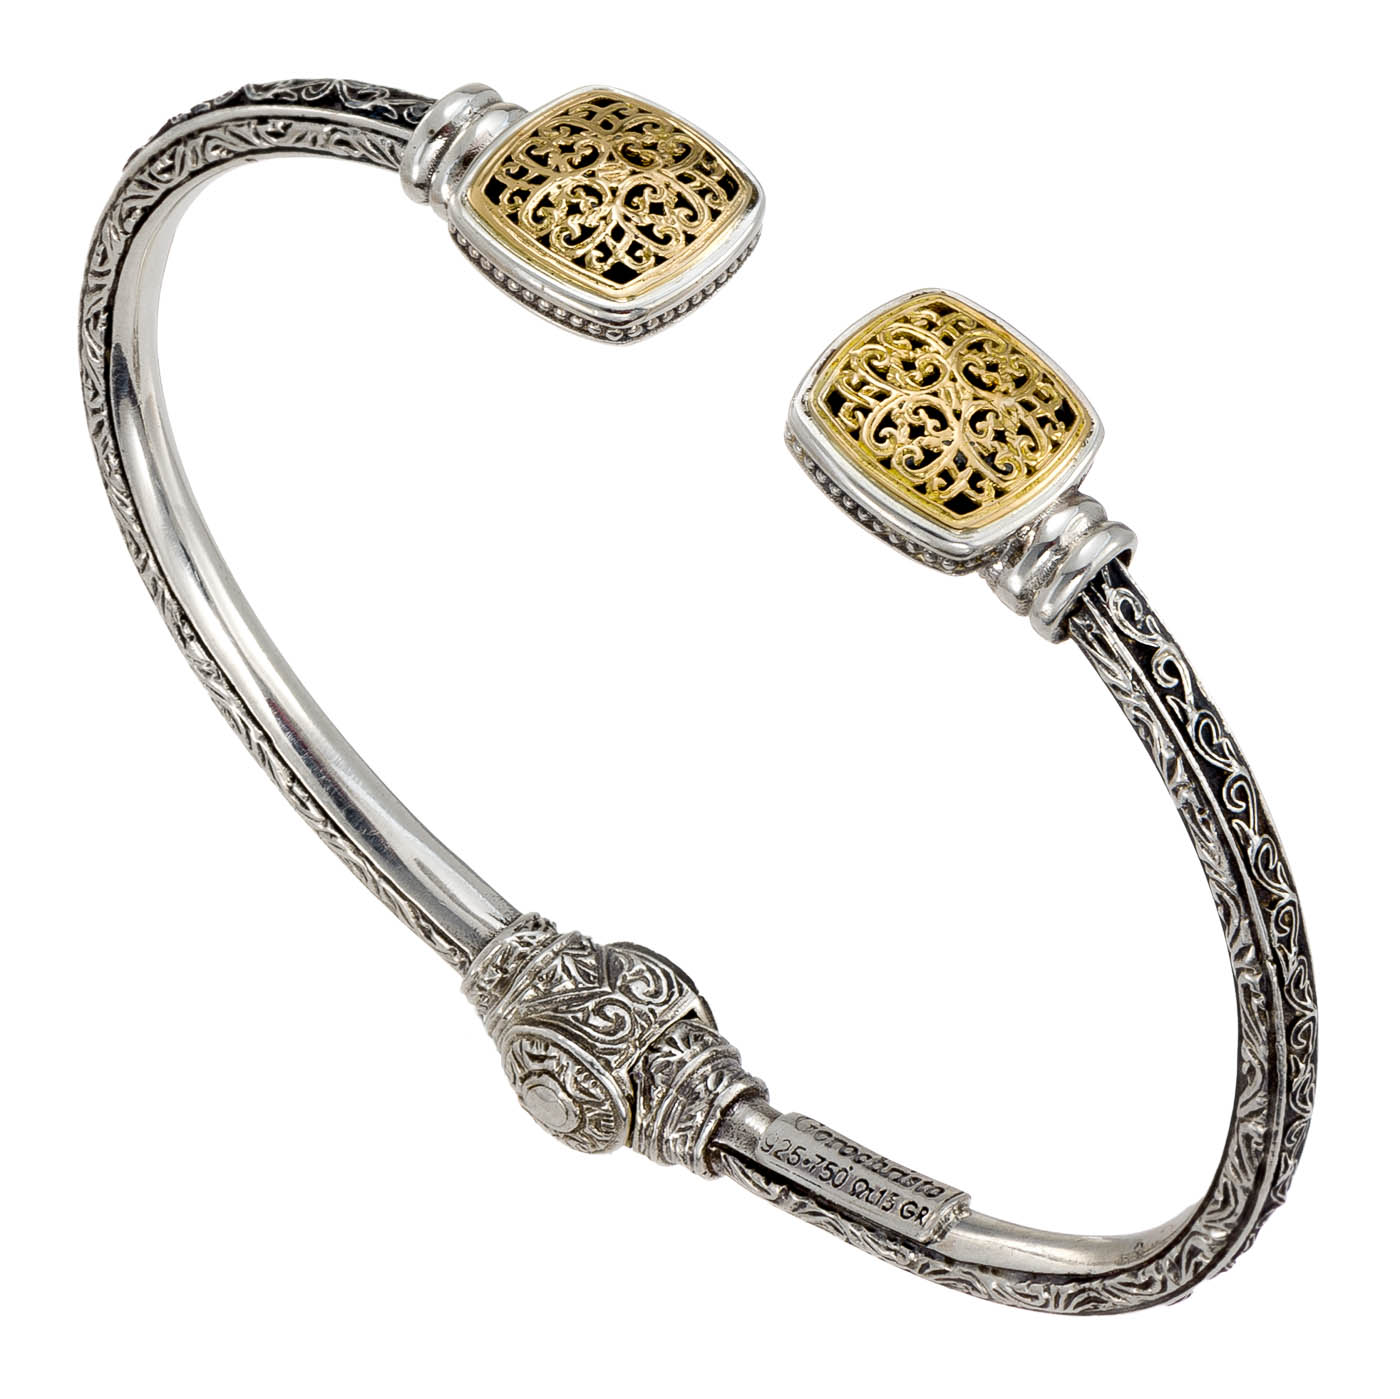 Mediterranean Bracelet in 18K Gold and Sterling Silver